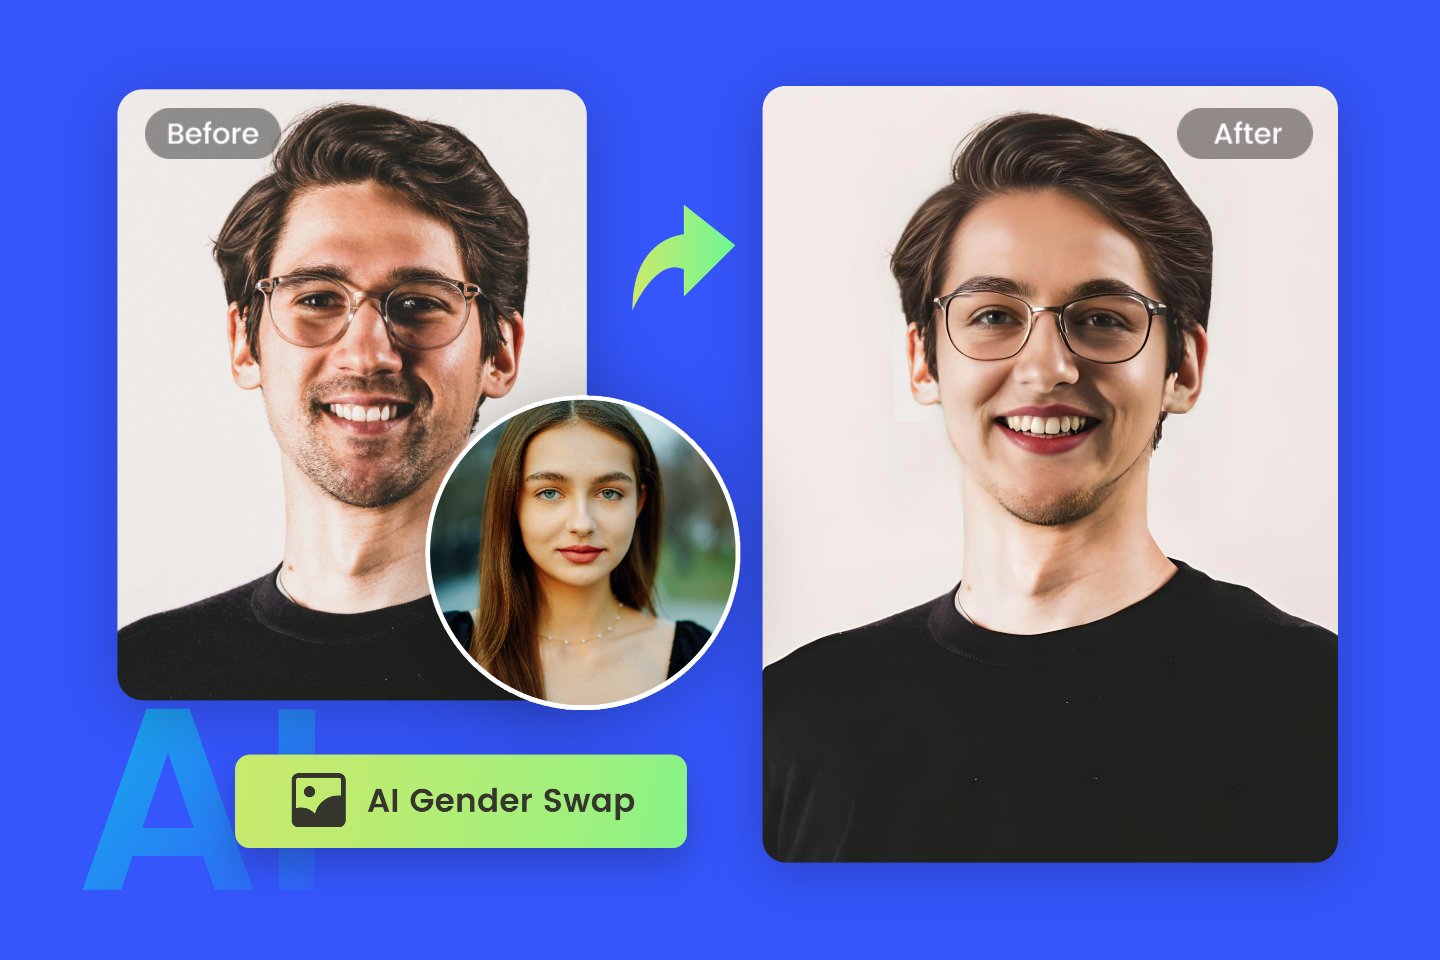 Use fotor online gender swap tool to turn female into male look